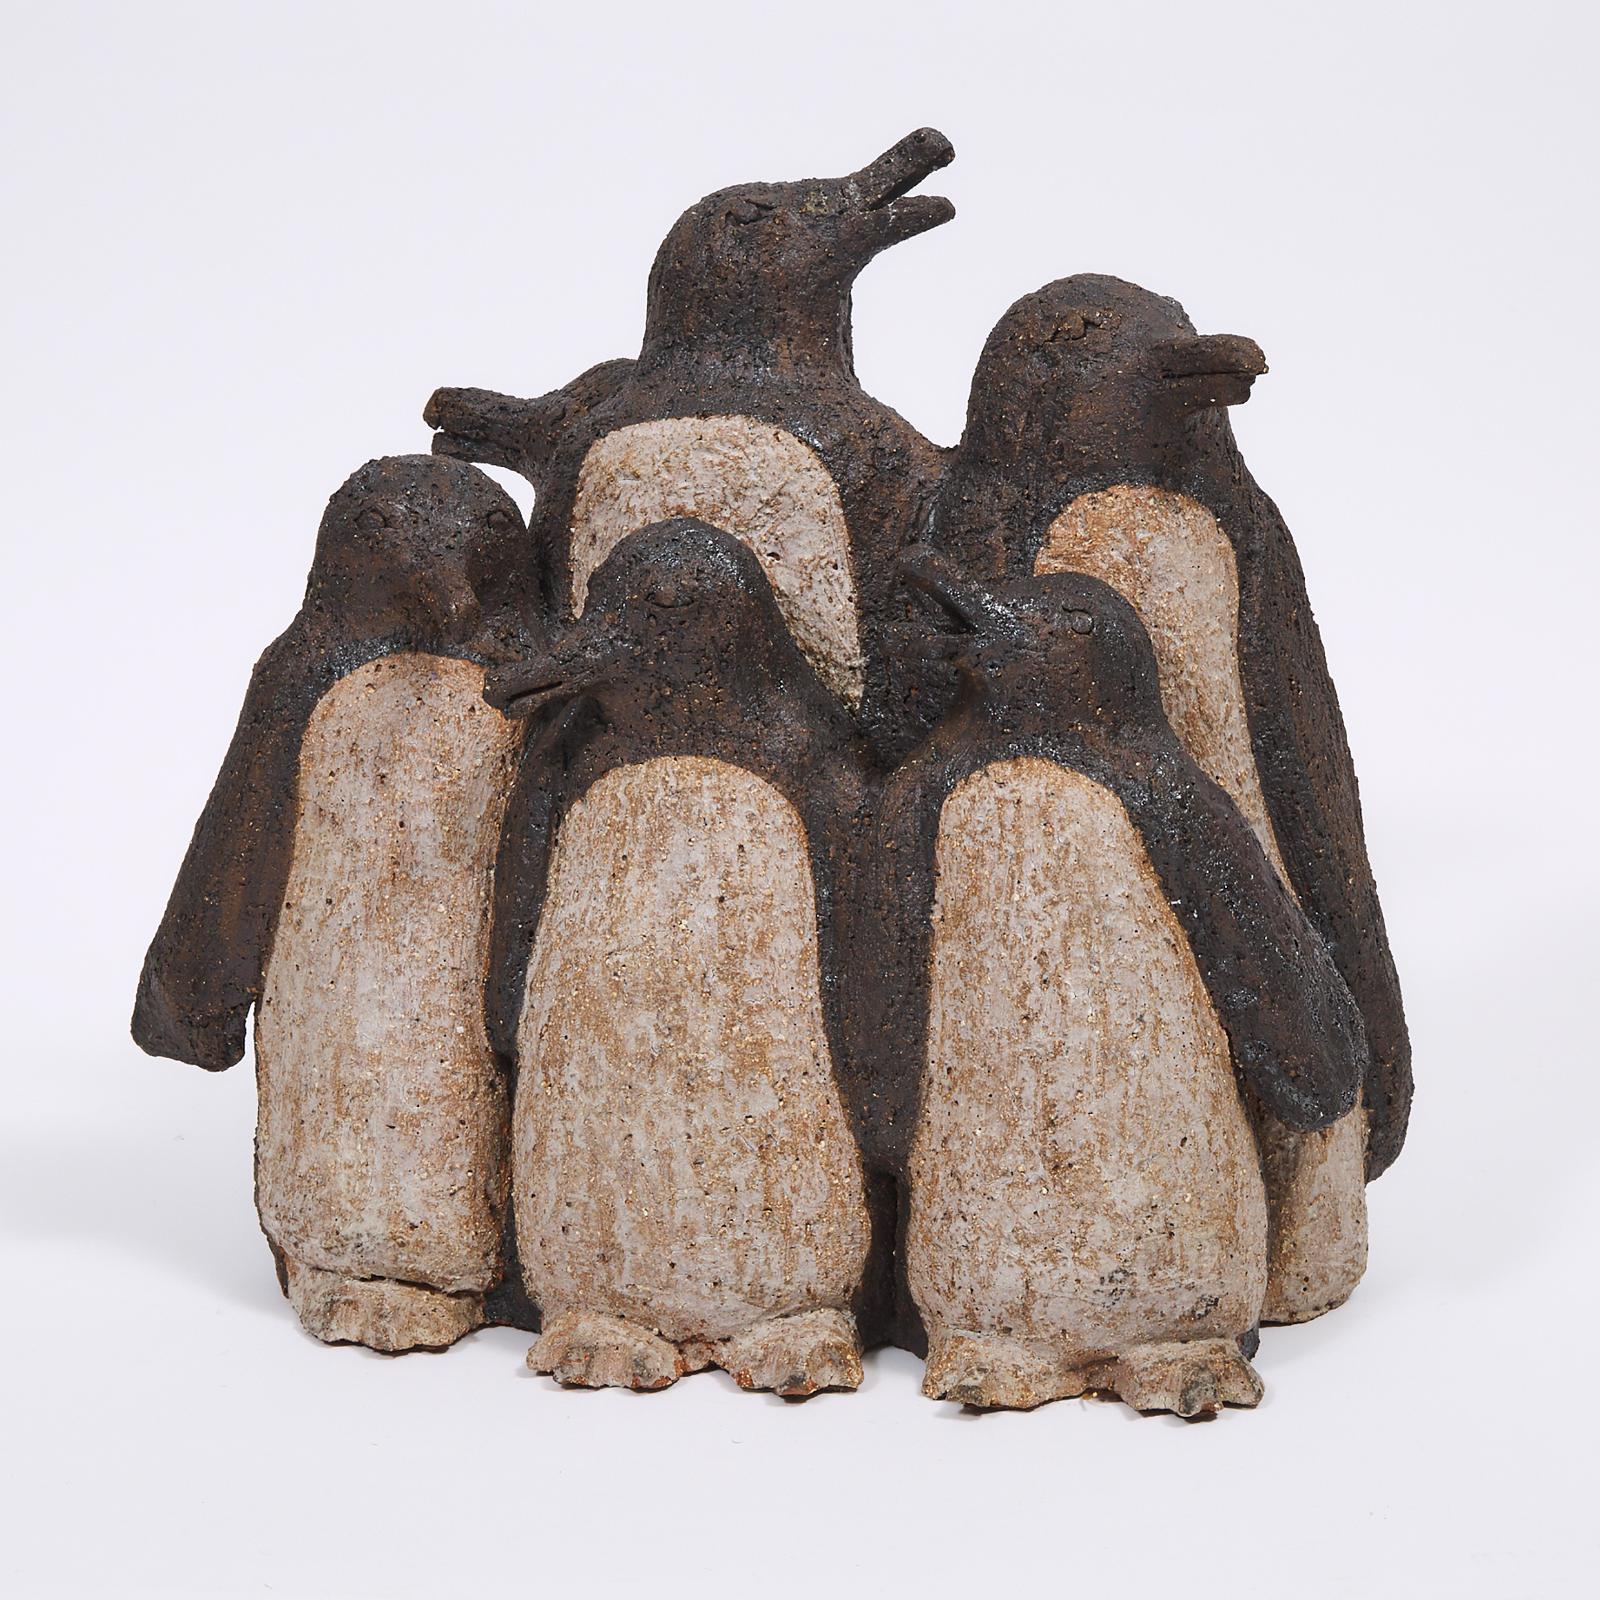 Celia Kainz (1934) - A Waddle Of Penguins